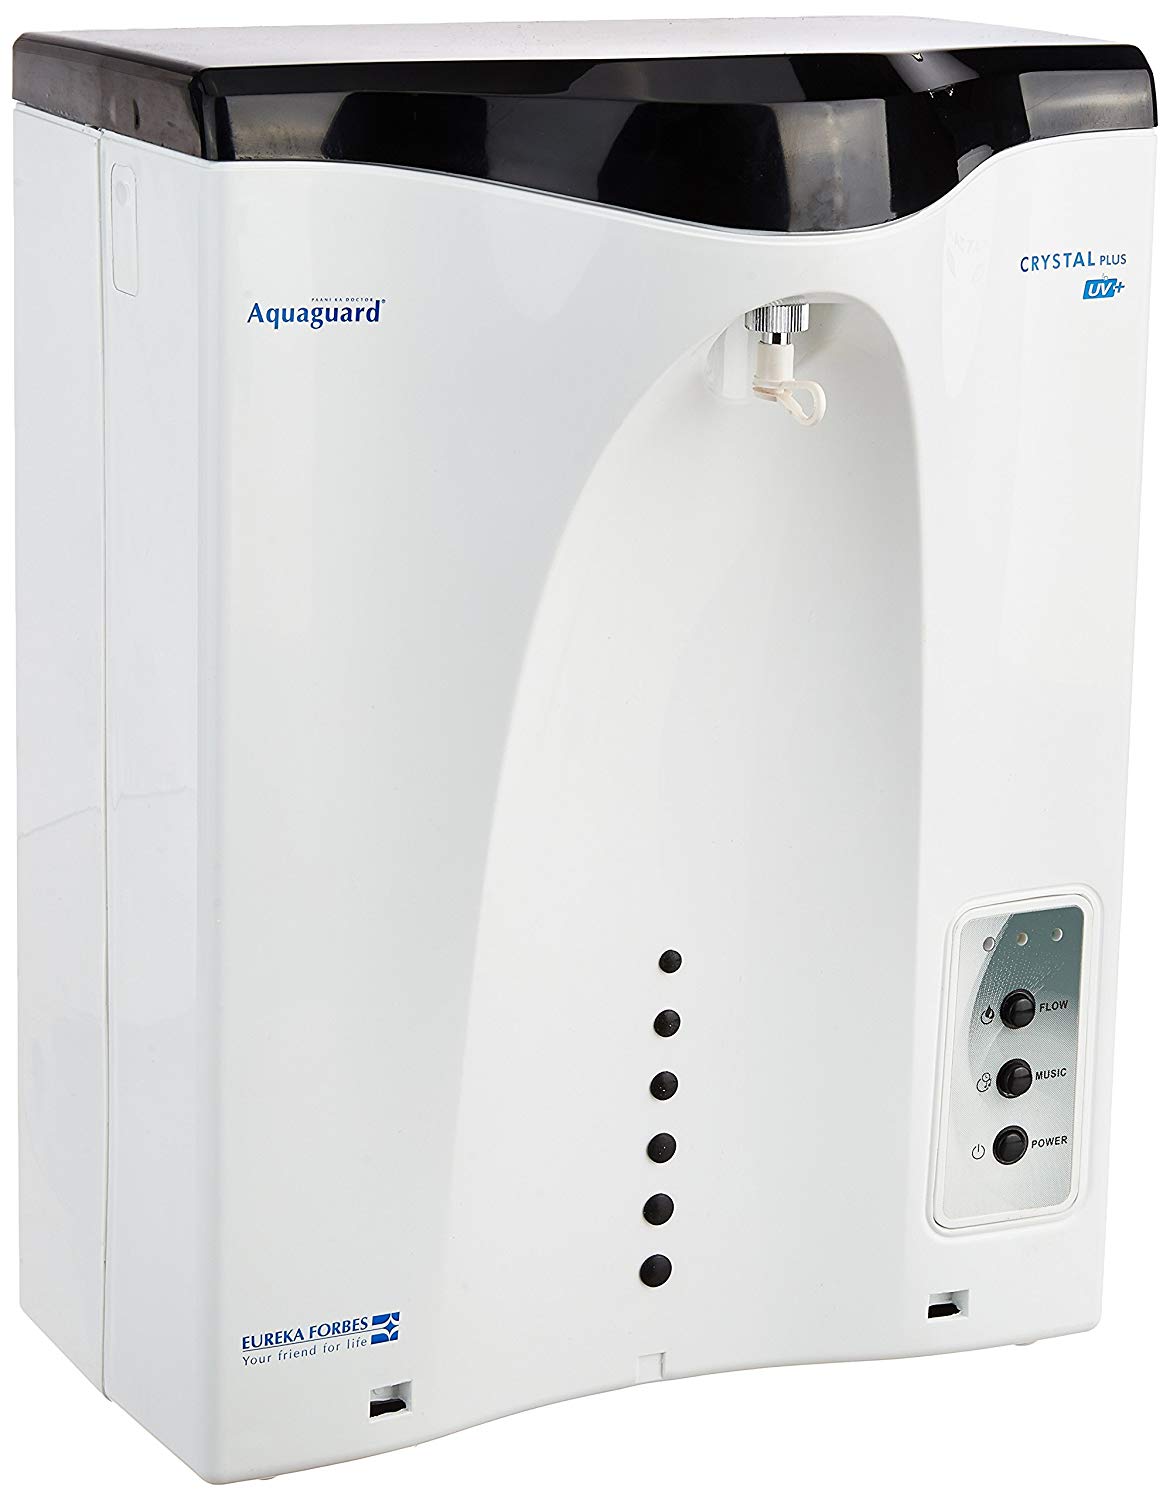 Eureka Forbes Aquaguard Classic UV Water Purifier Review